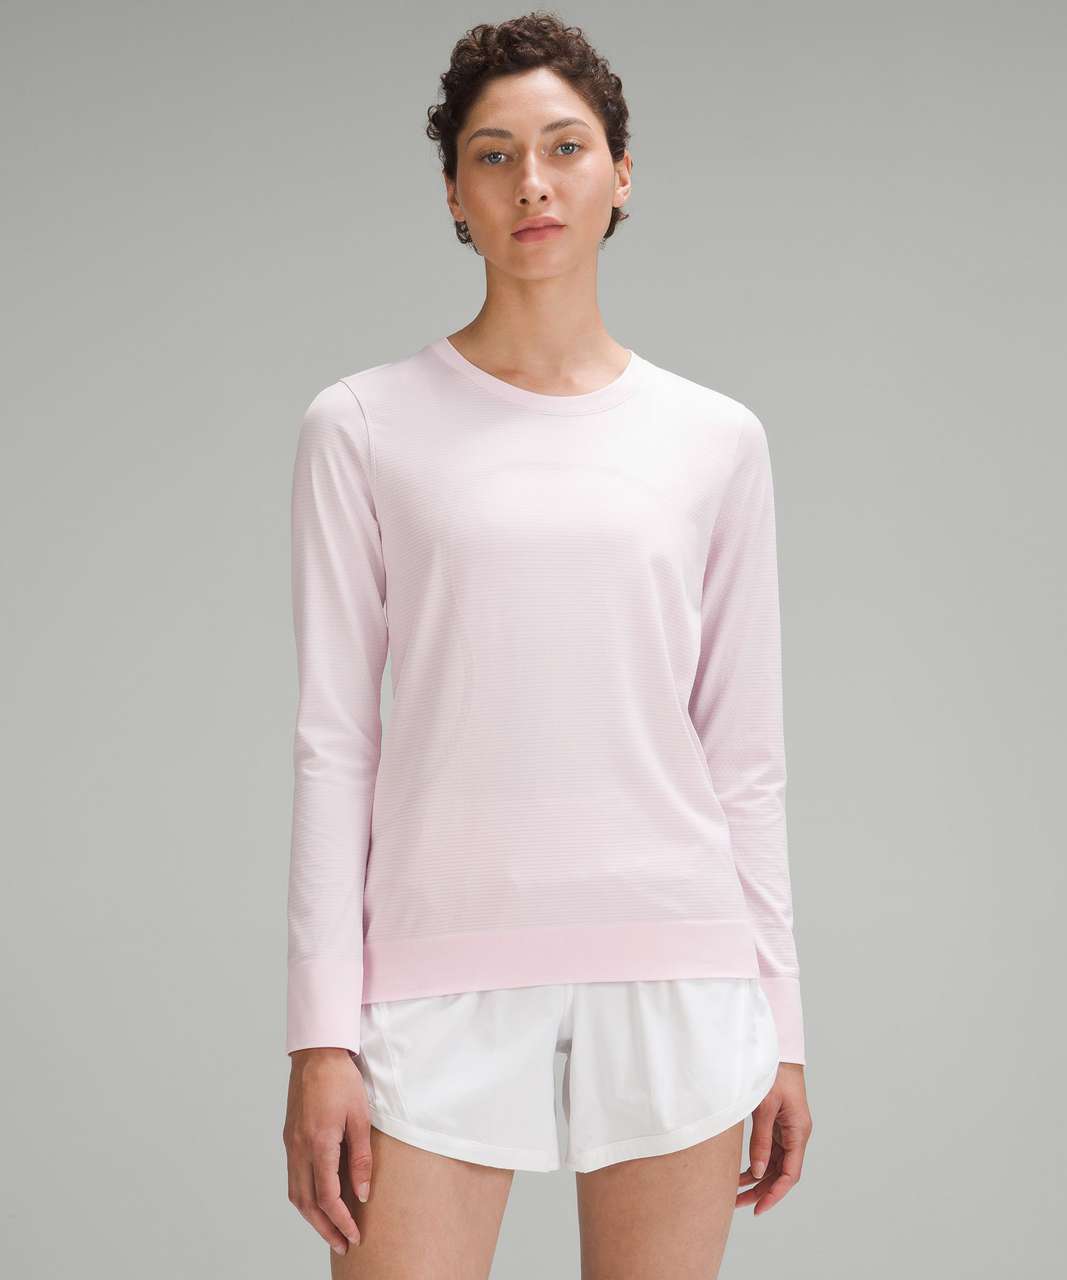 Lululemon Swiftly Relaxed Long-Sleeve Shirt - Meadowsweet Pink / Meadowsweet Pink